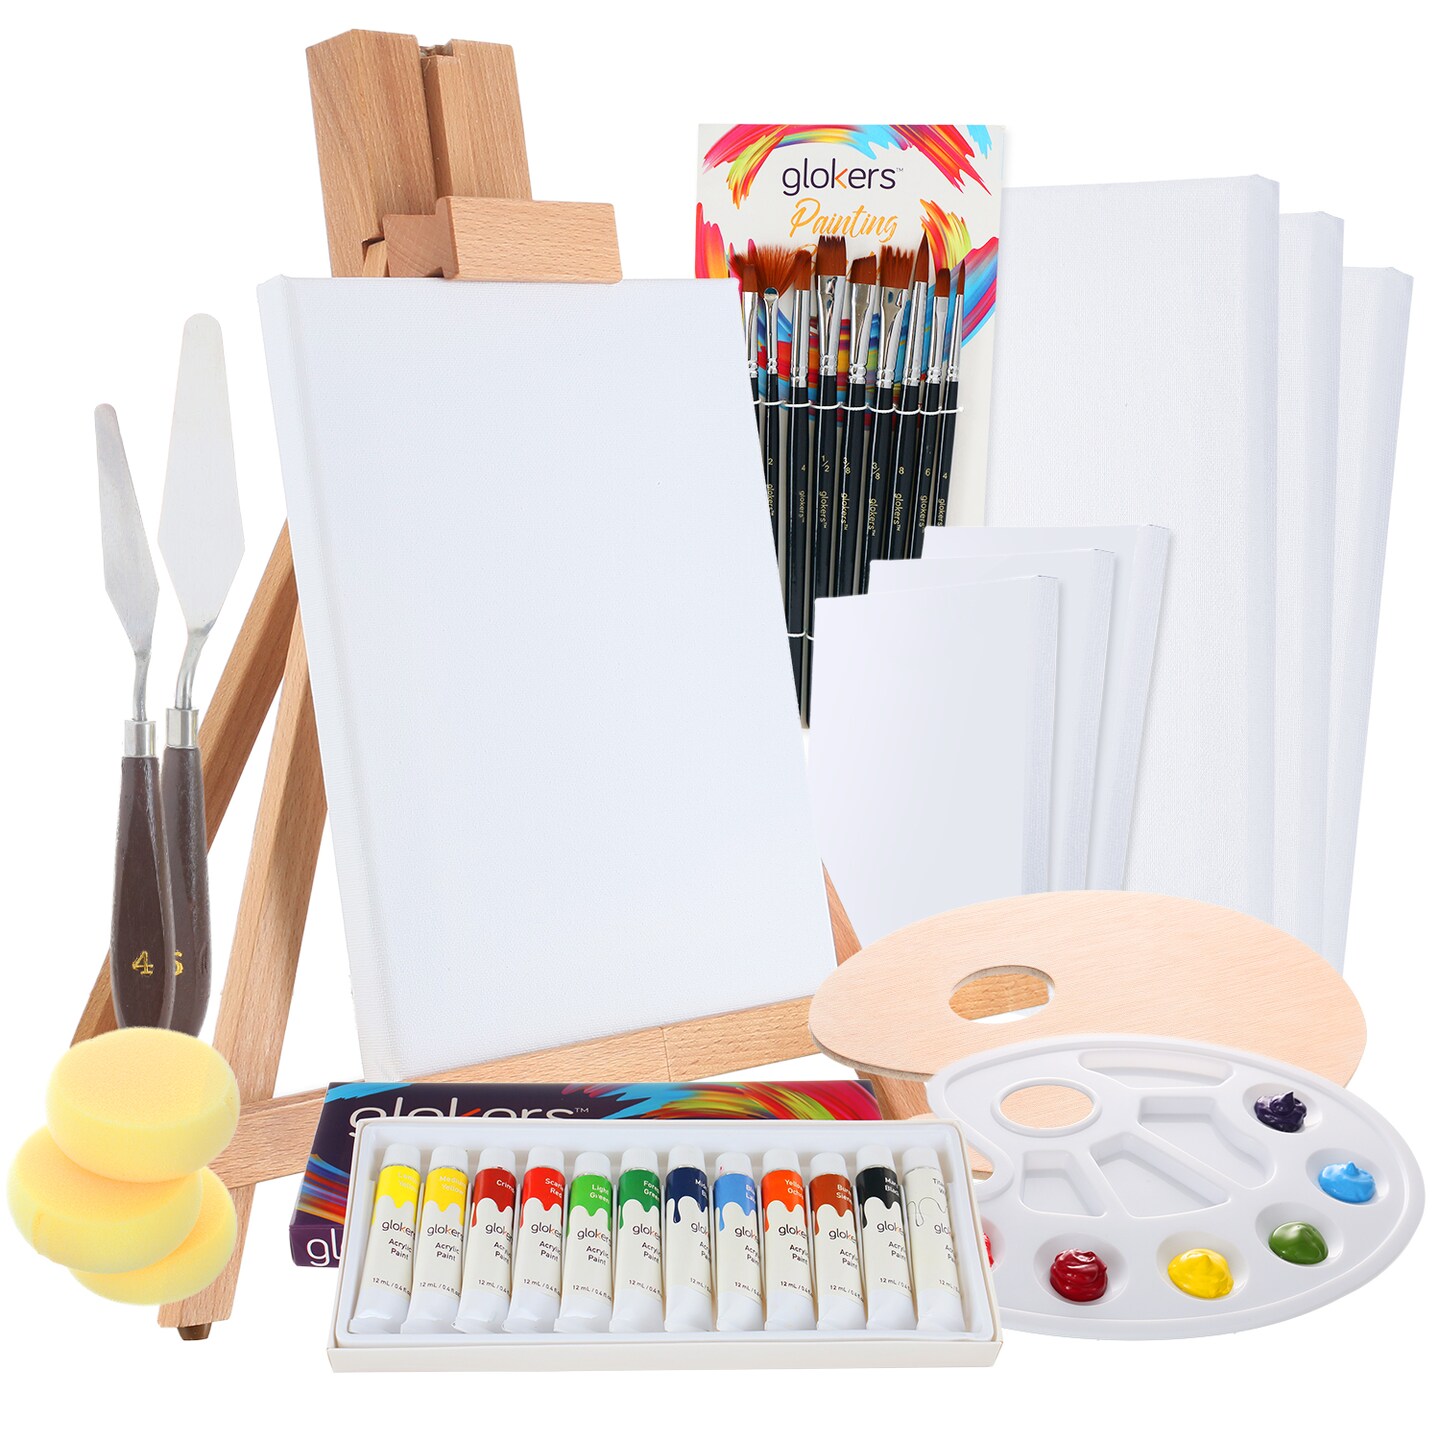 Complete Acrylic Paint Set, 36 Piece Professional Painting Set